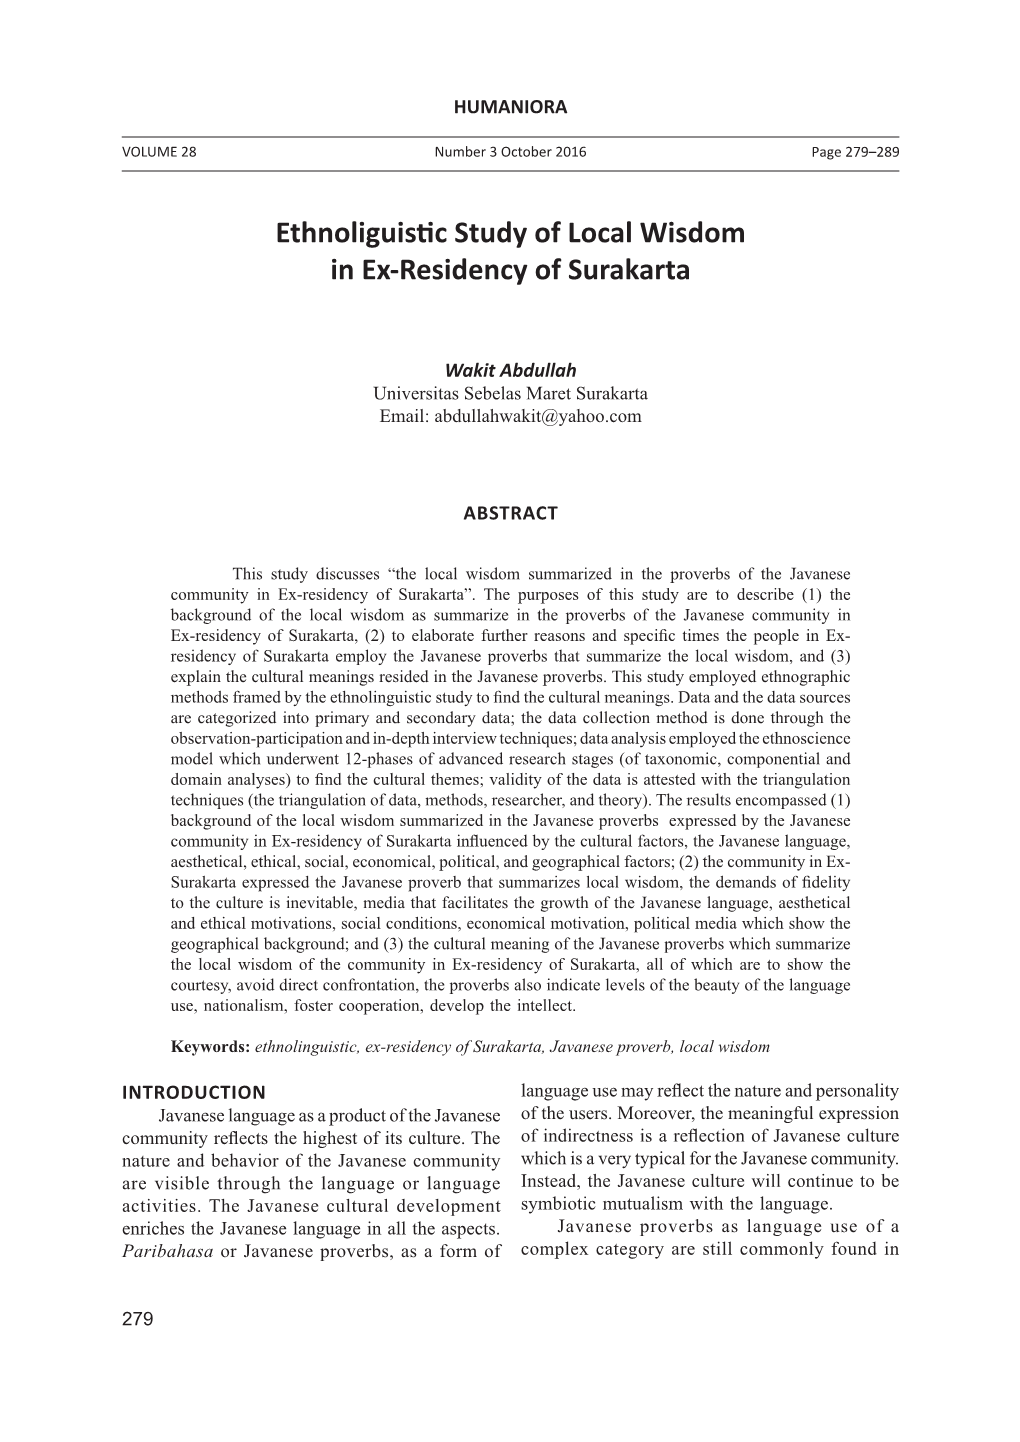 Ethnoliguistic Study of Local Wisdom in Ex-Residency of Surakarta